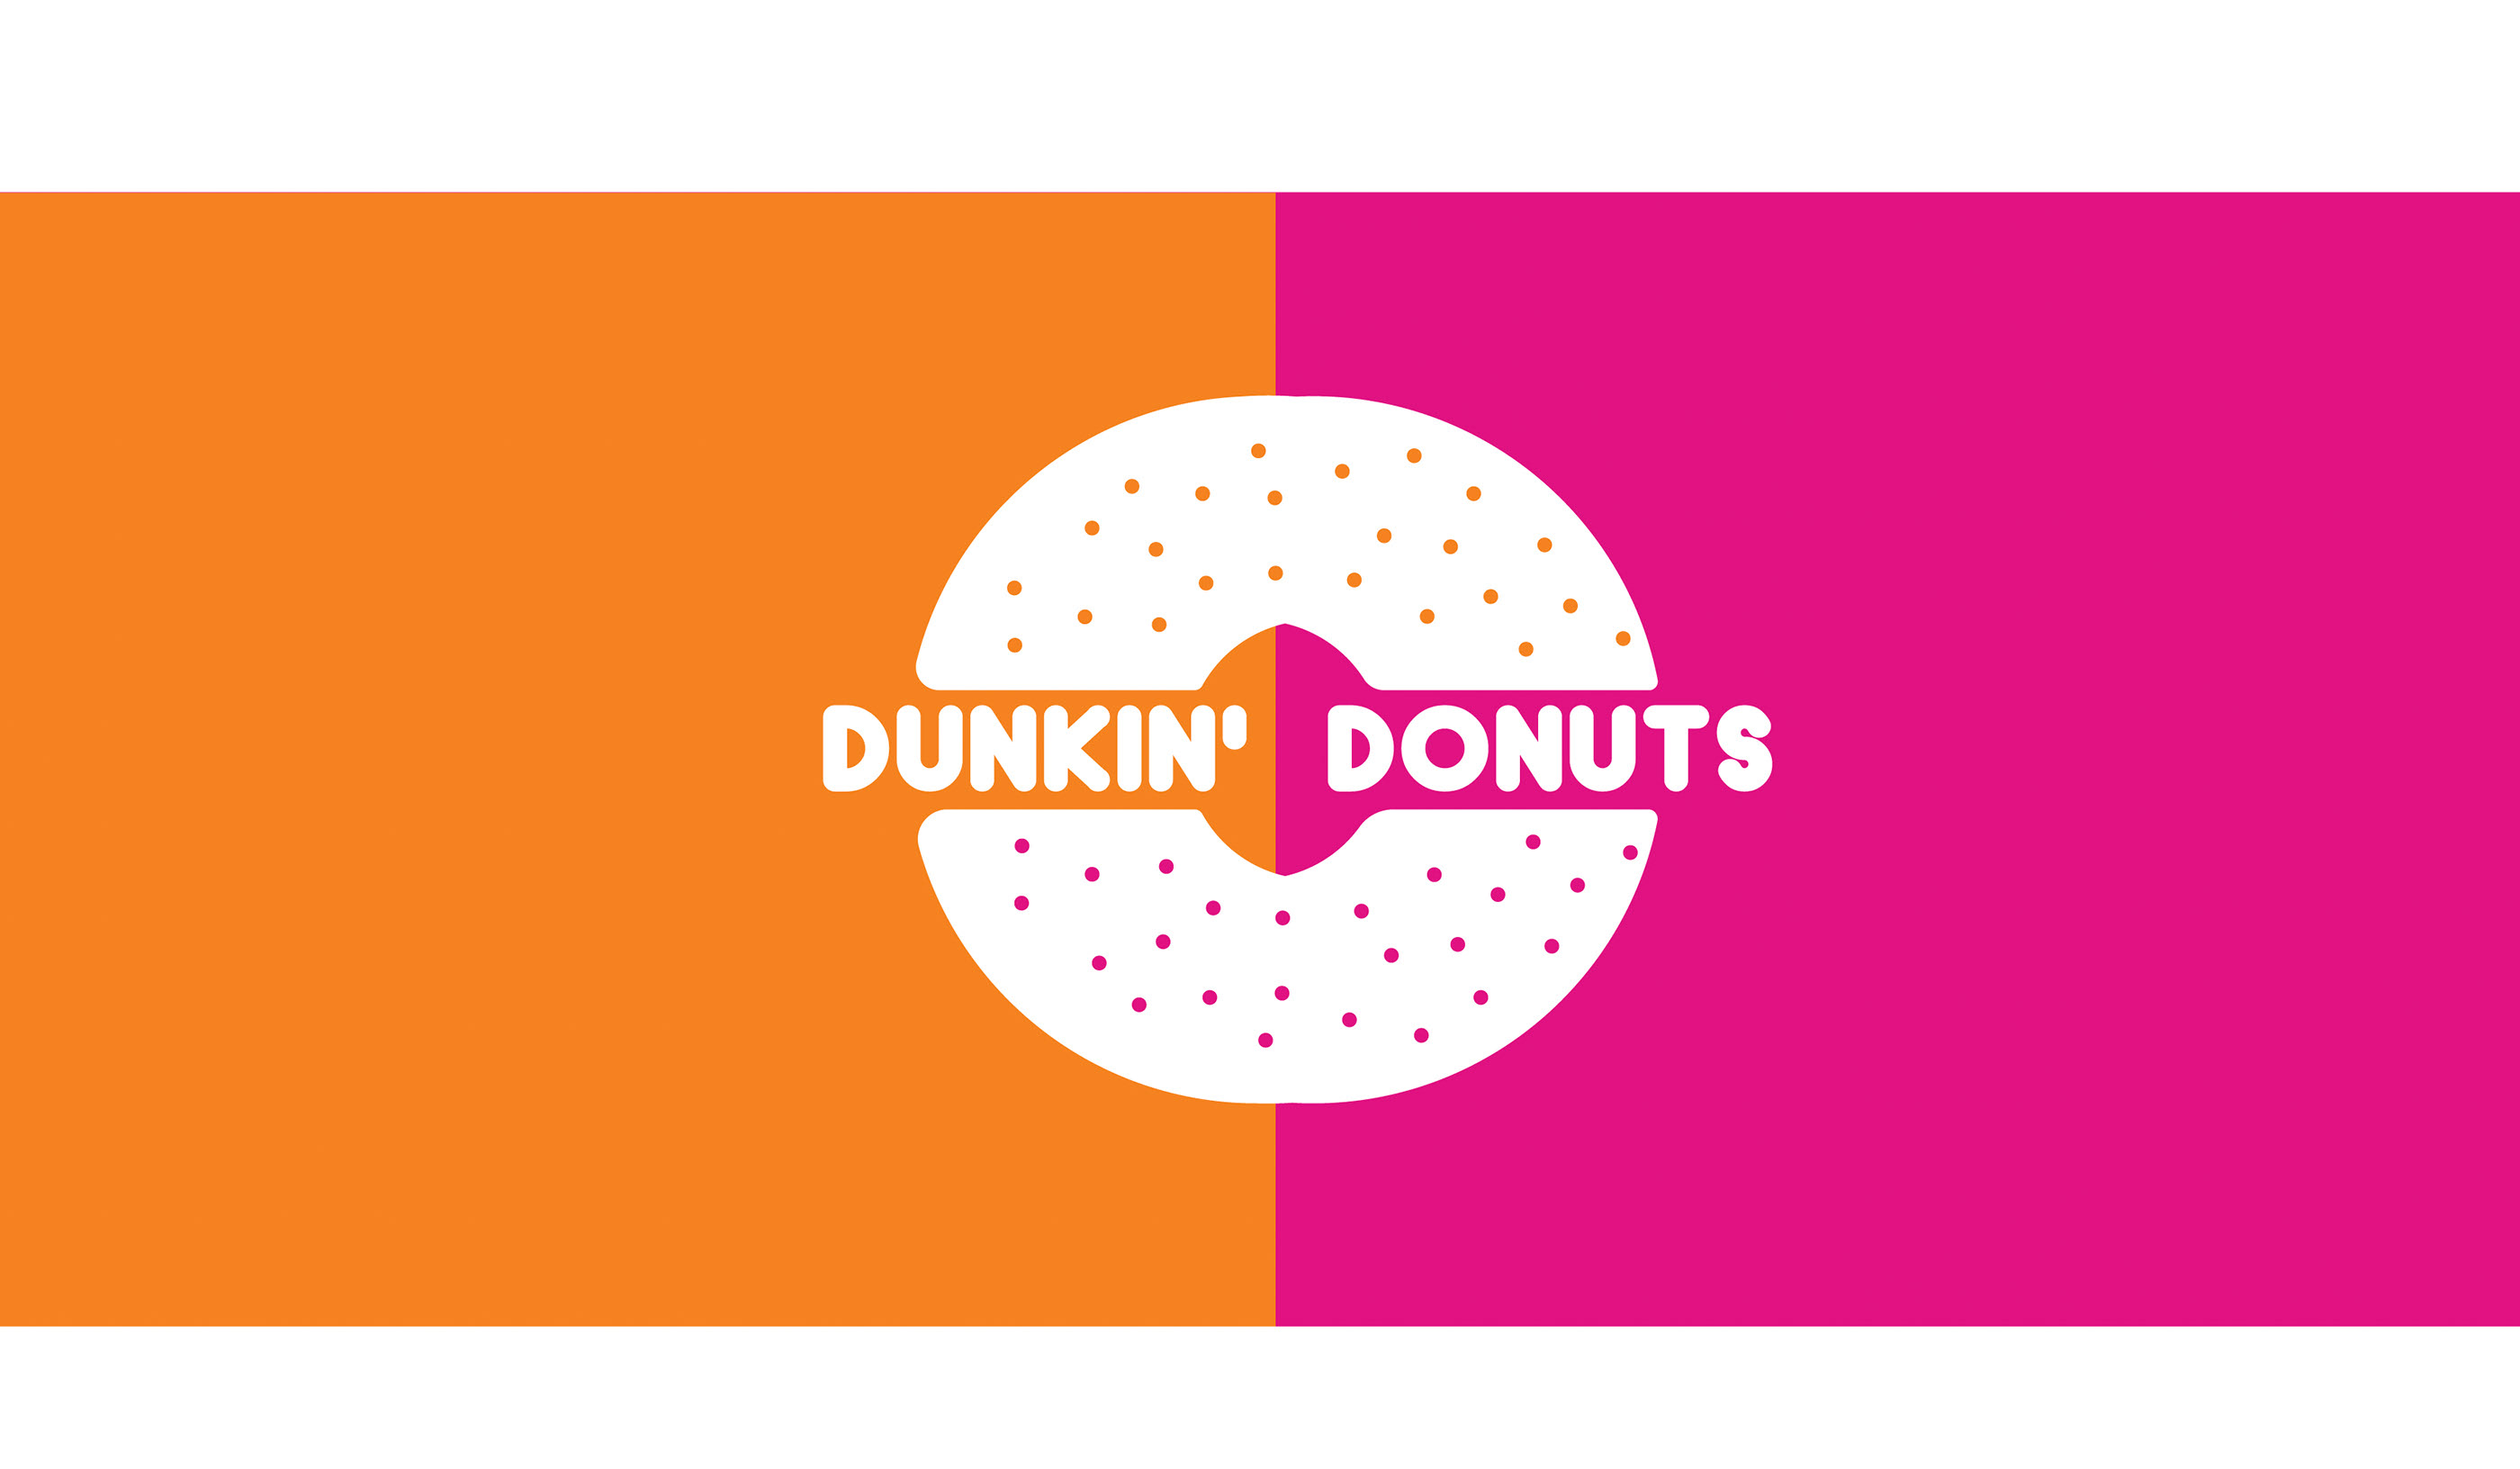 3. Re-branding DUNKIN DONUTS logo. 